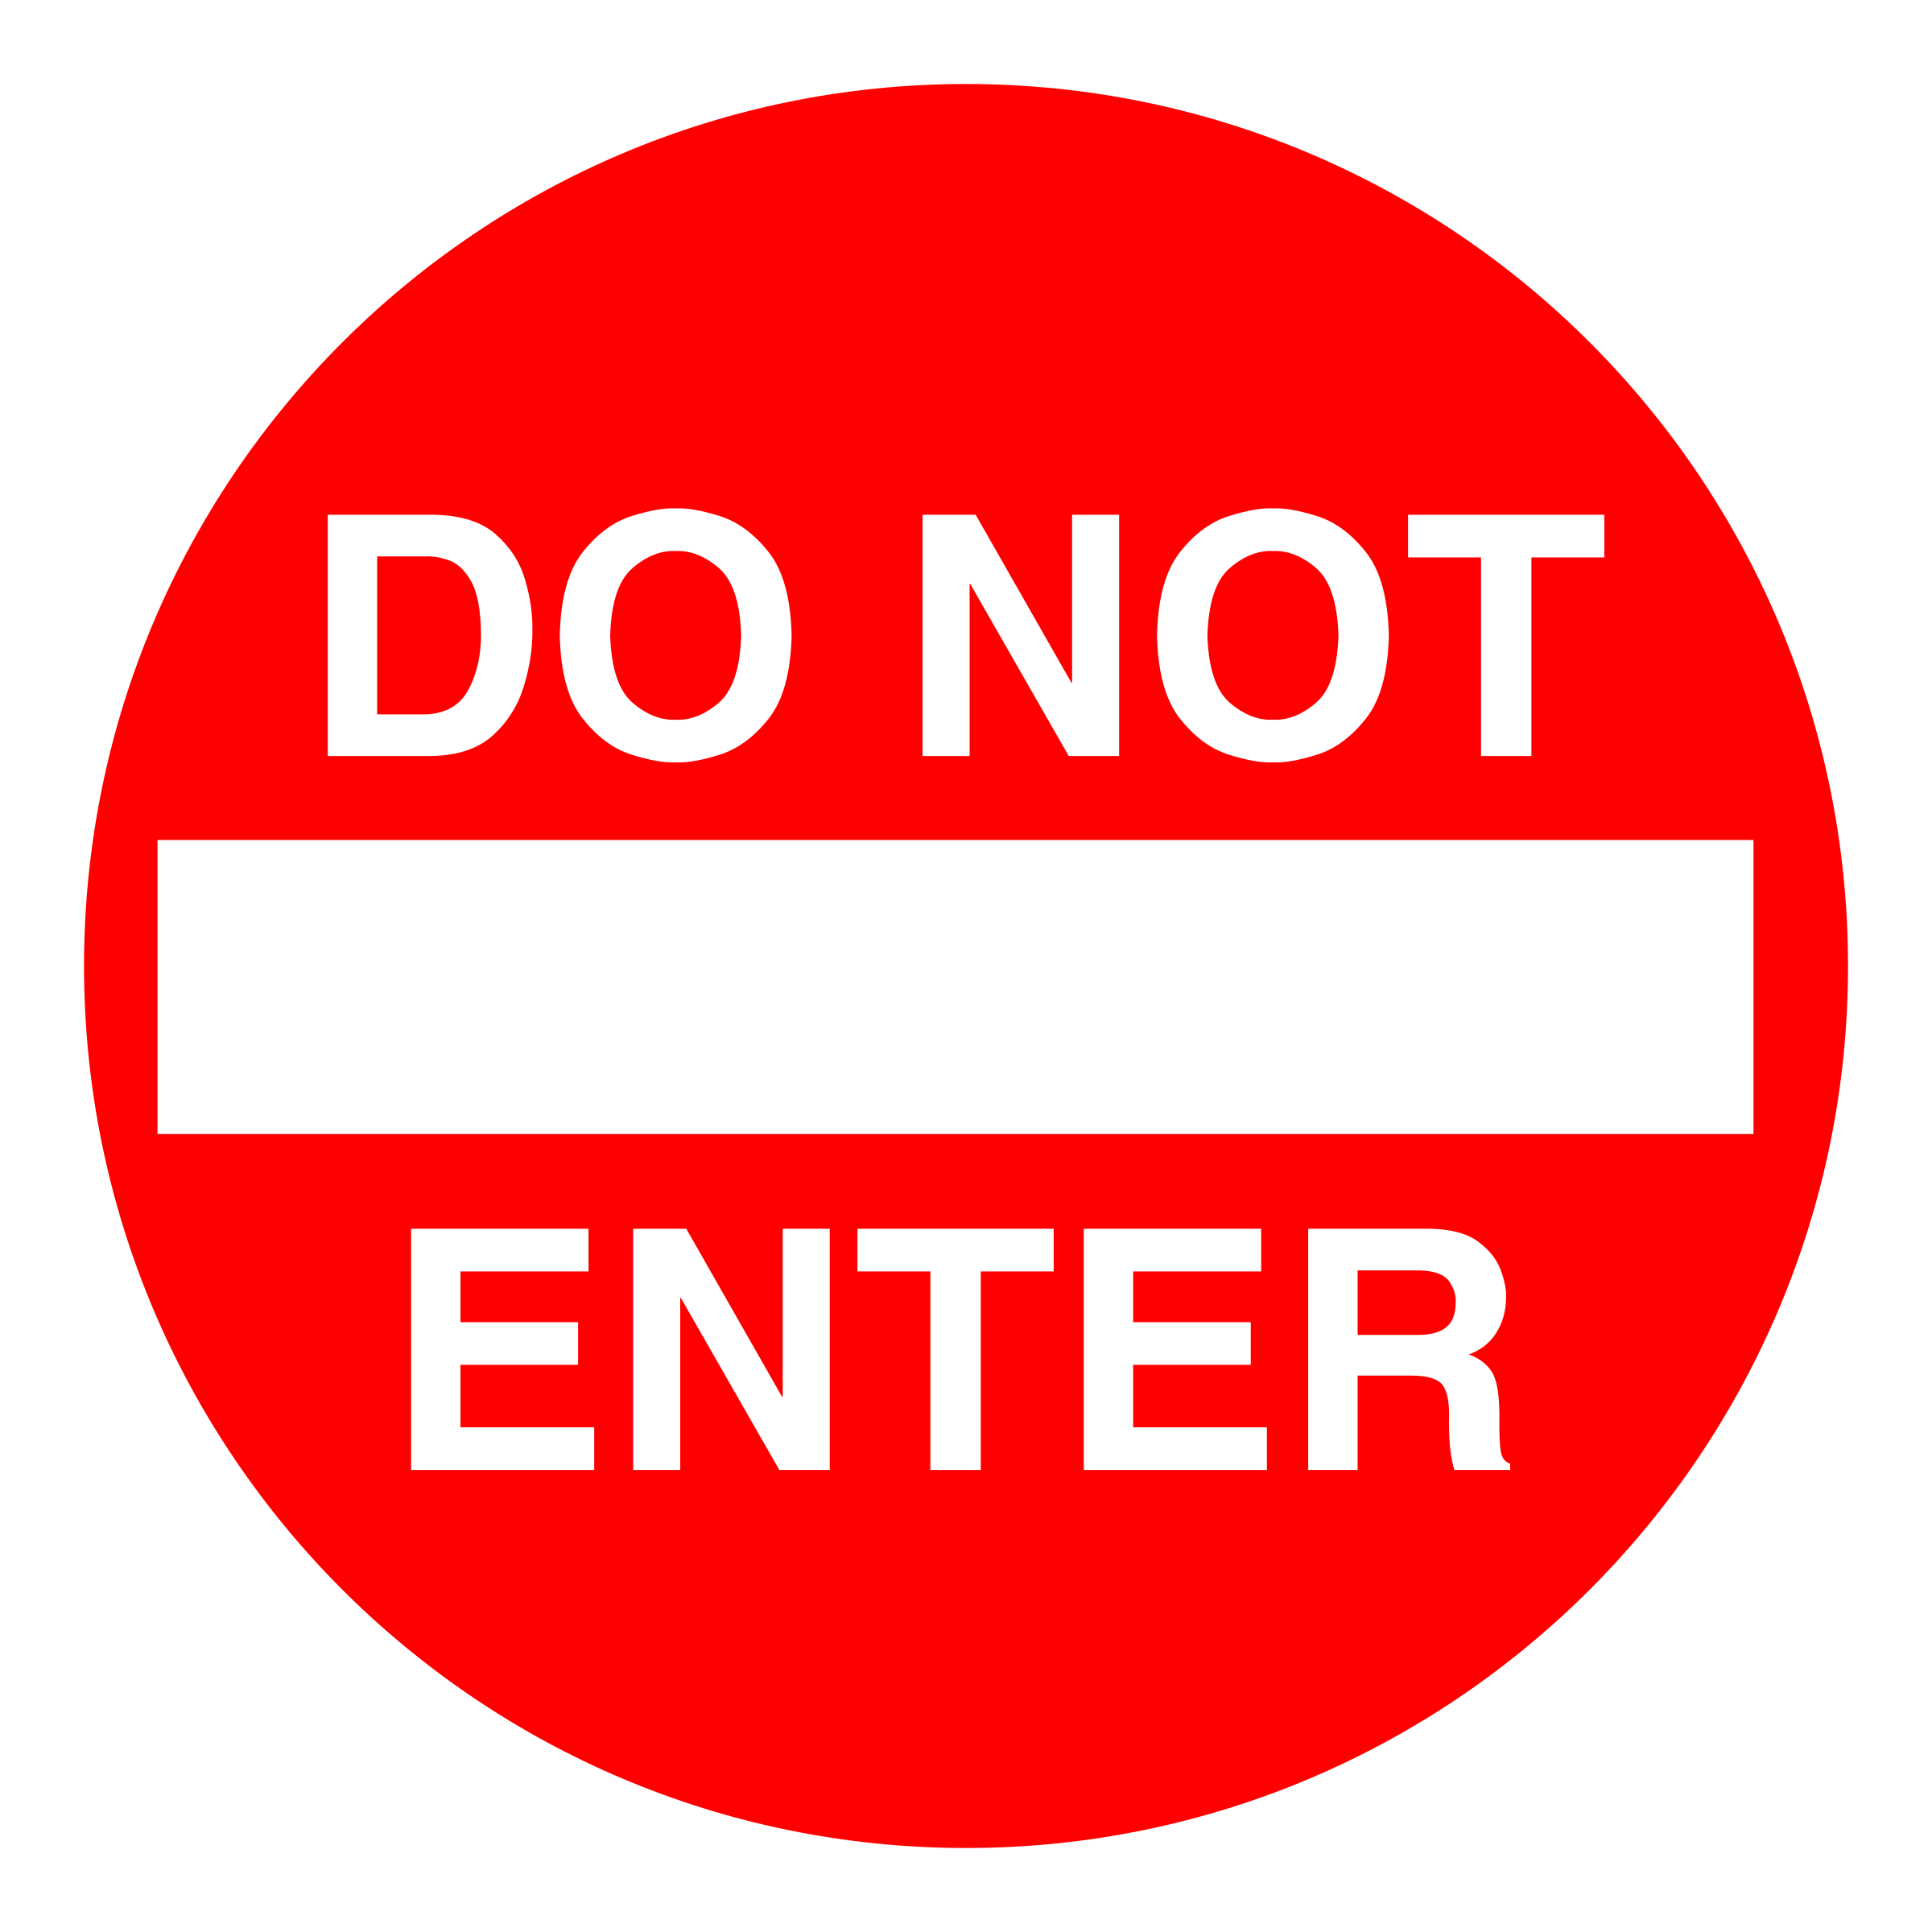 Clipart - Do Not Enter sign